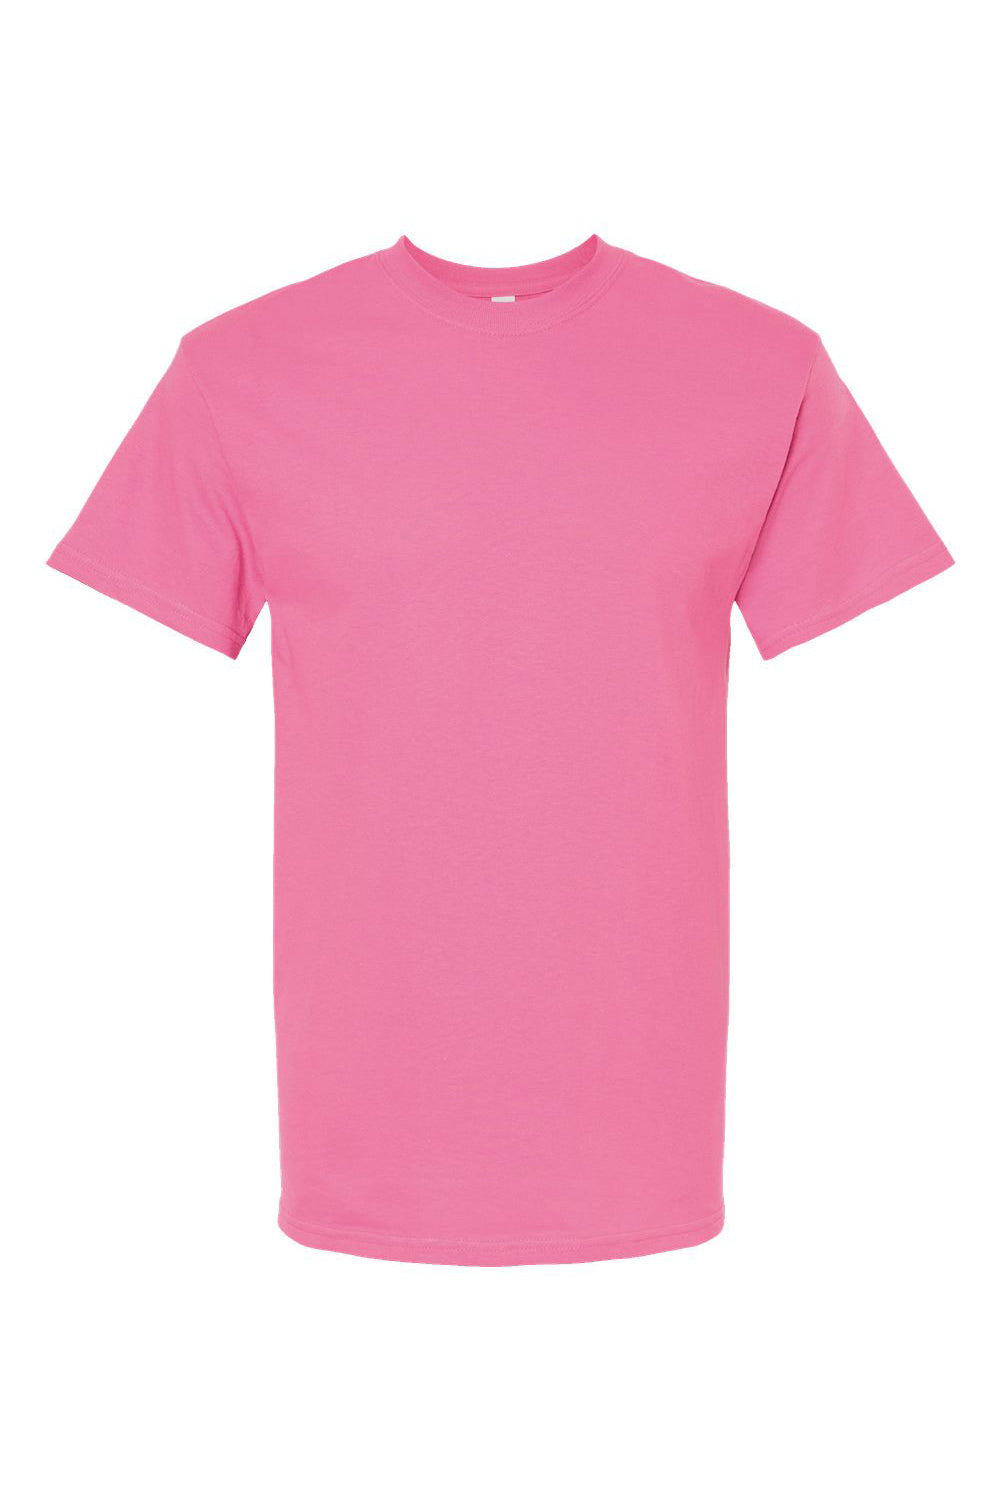 M&O 4800 Mens Gold Soft Touch Short Sleeve Crewneck T-Shirt Azalea Pink Flat Front